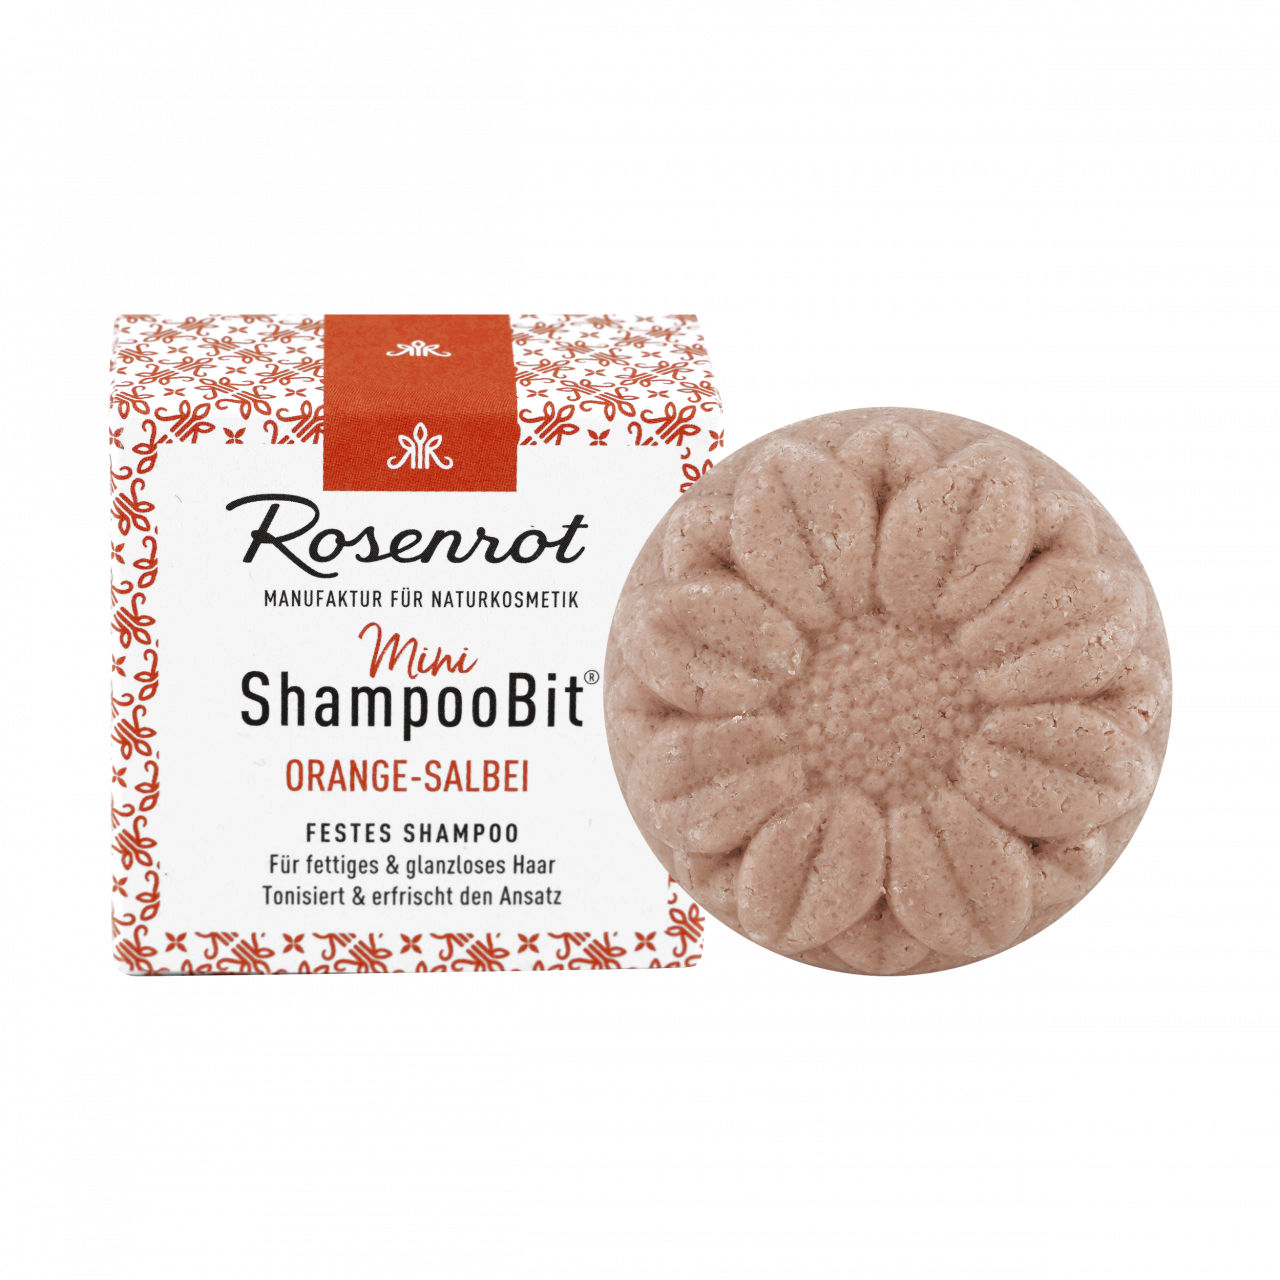 ShampooBit® Mini - festes Shampoo Orange-Salbei 100%vegan